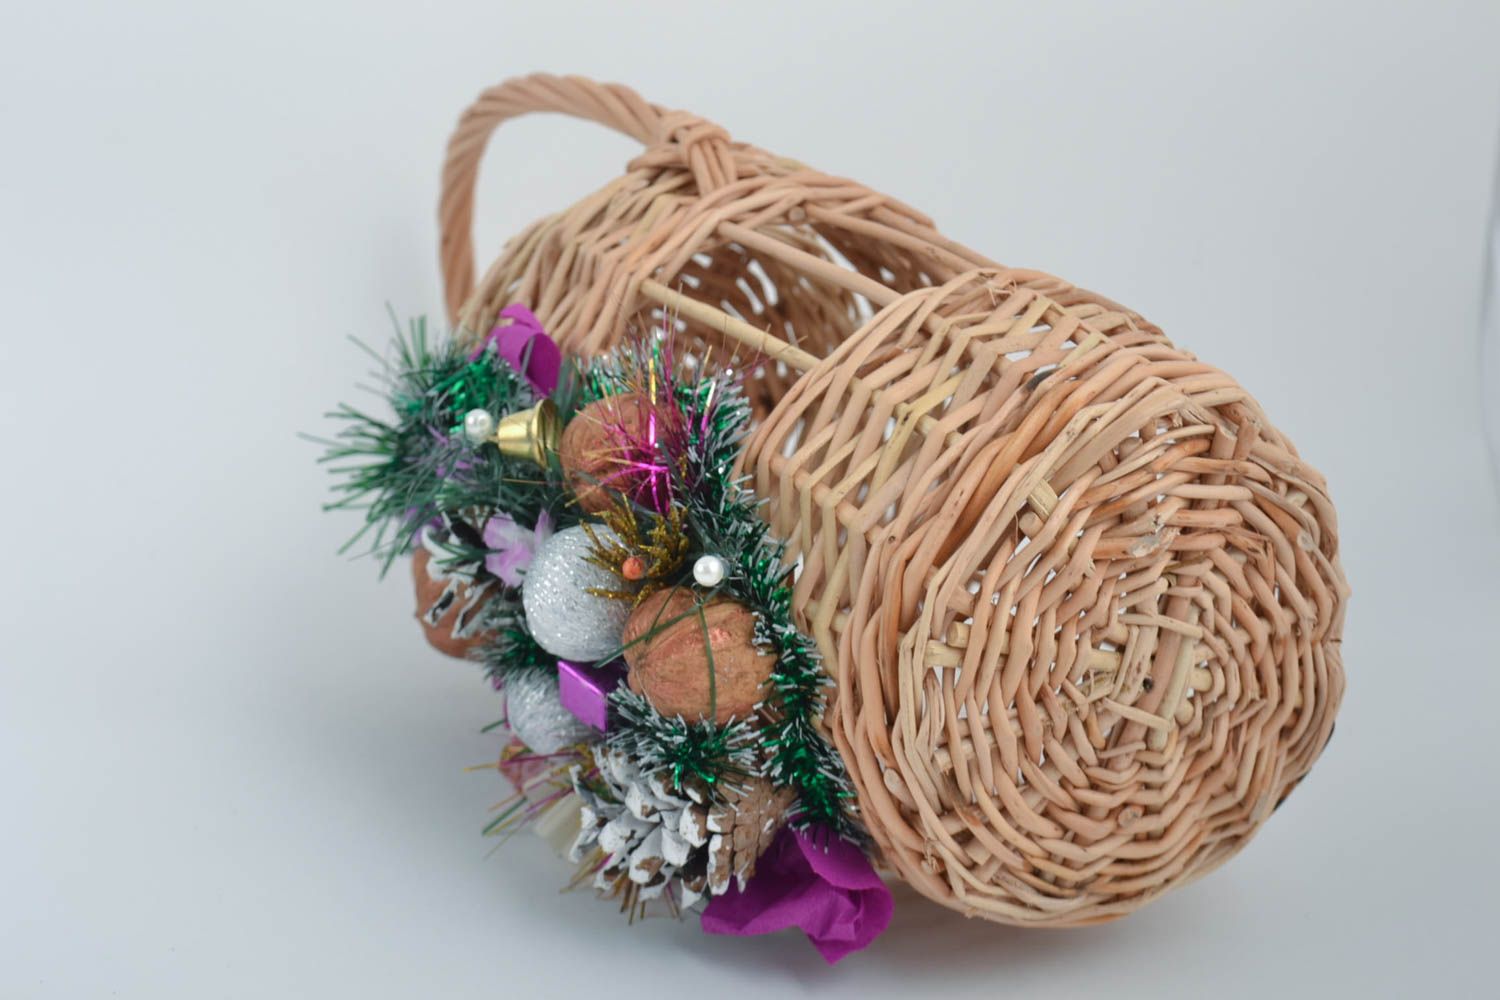 Beautiful handmade woven basket Easter basket ideas designer accessories photo 3